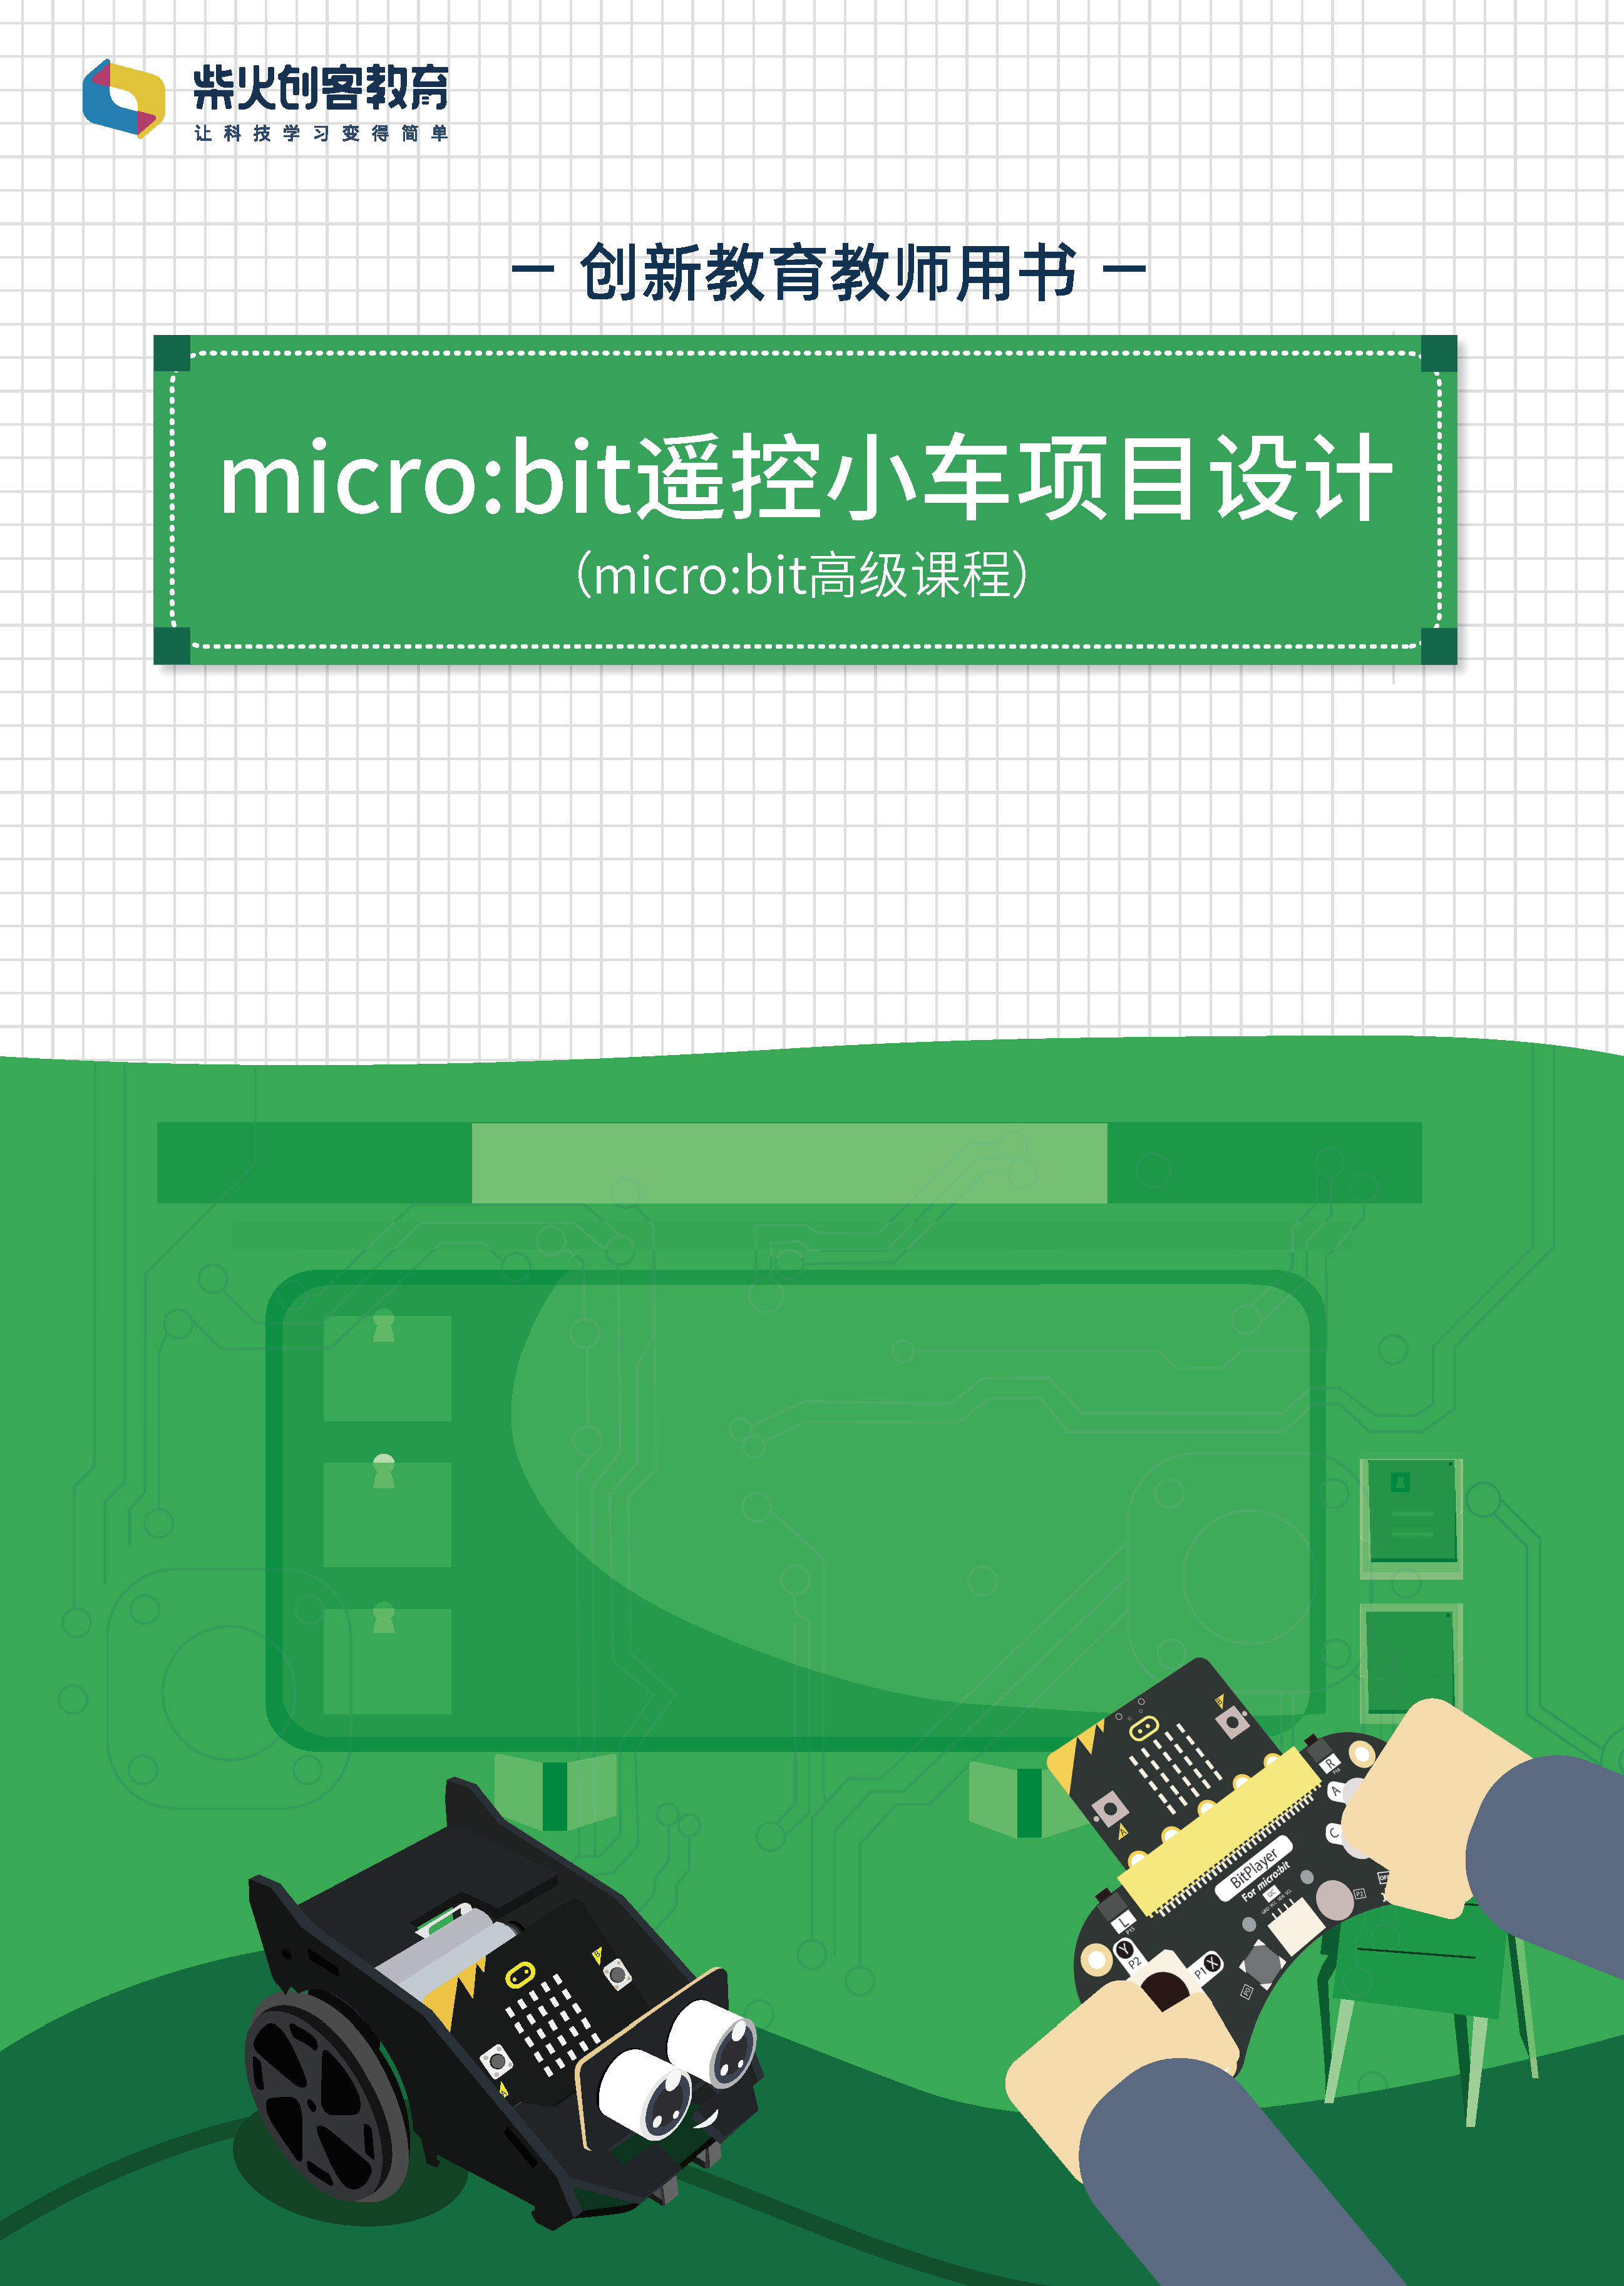 microbit-高级课程书籍封面-1_页面_4